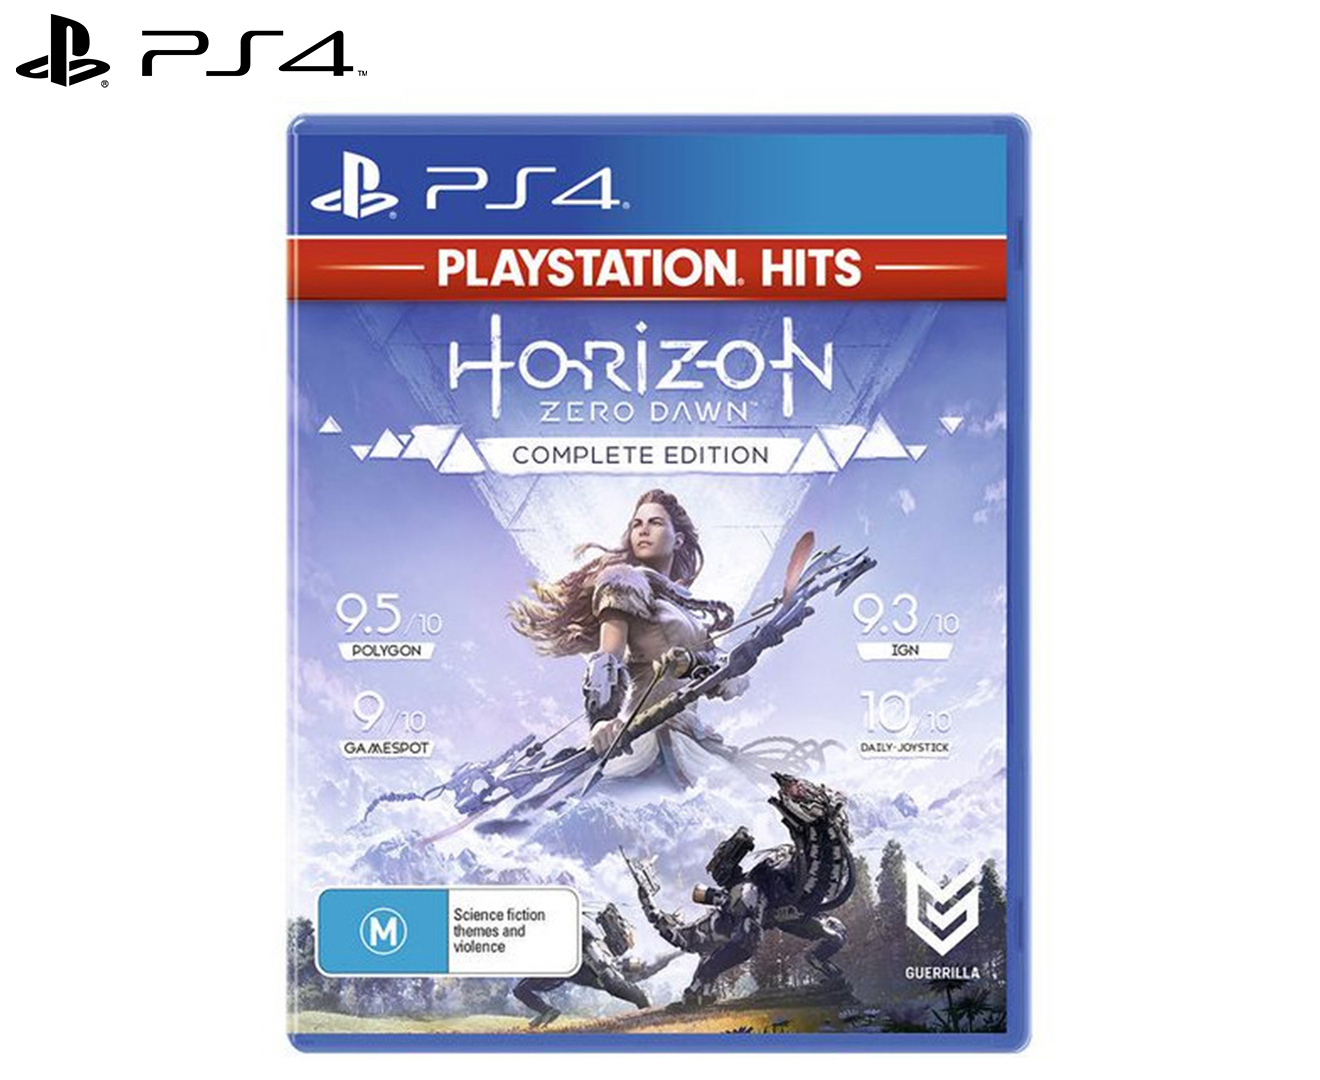 PlayStation 4 Horizon Zero Dawn: Complete Edition: PlayStation Hits Game |  